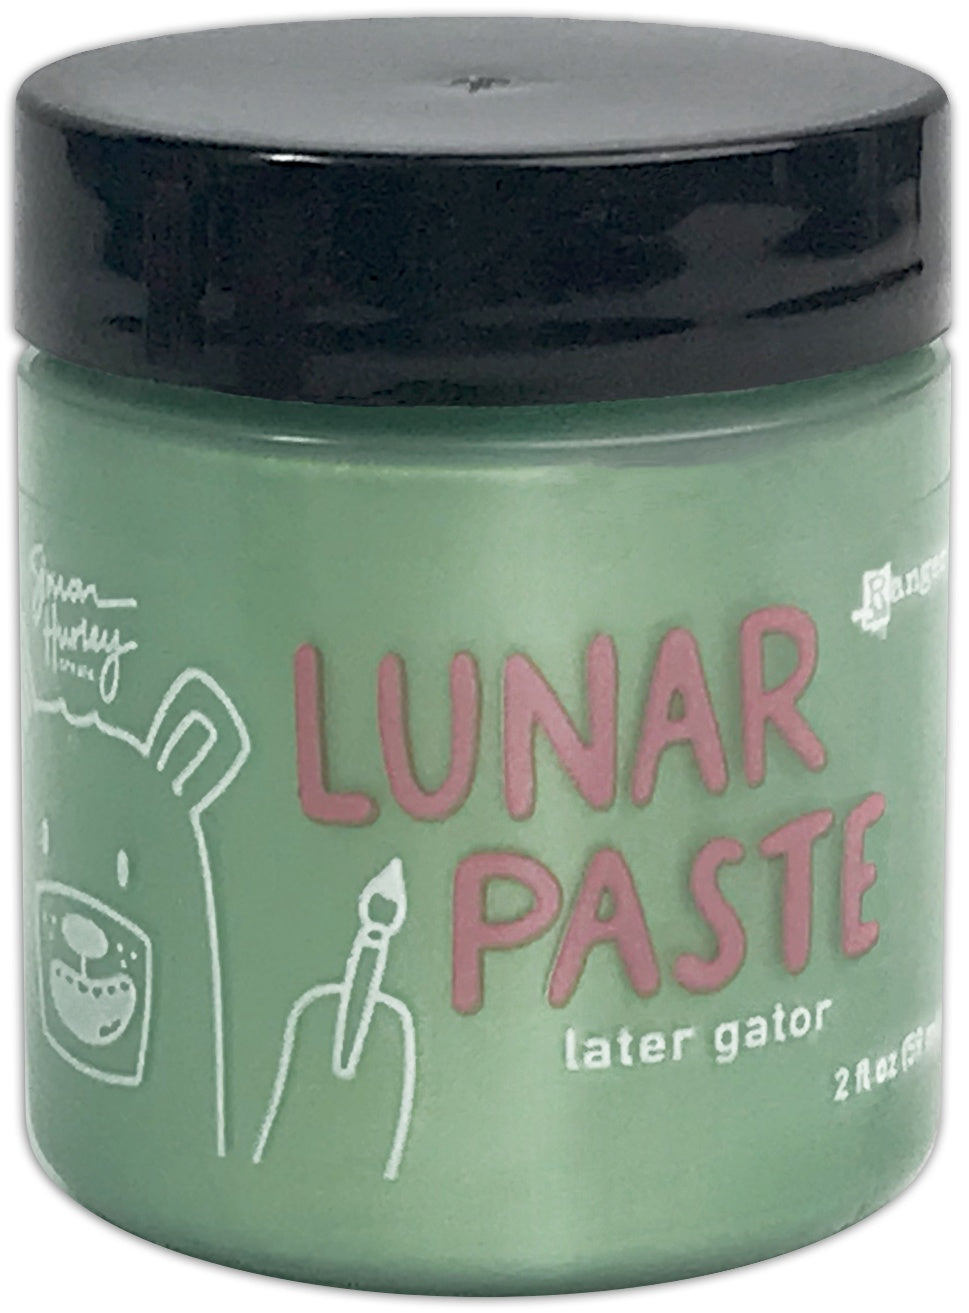 Lunar Paste - Later Gator